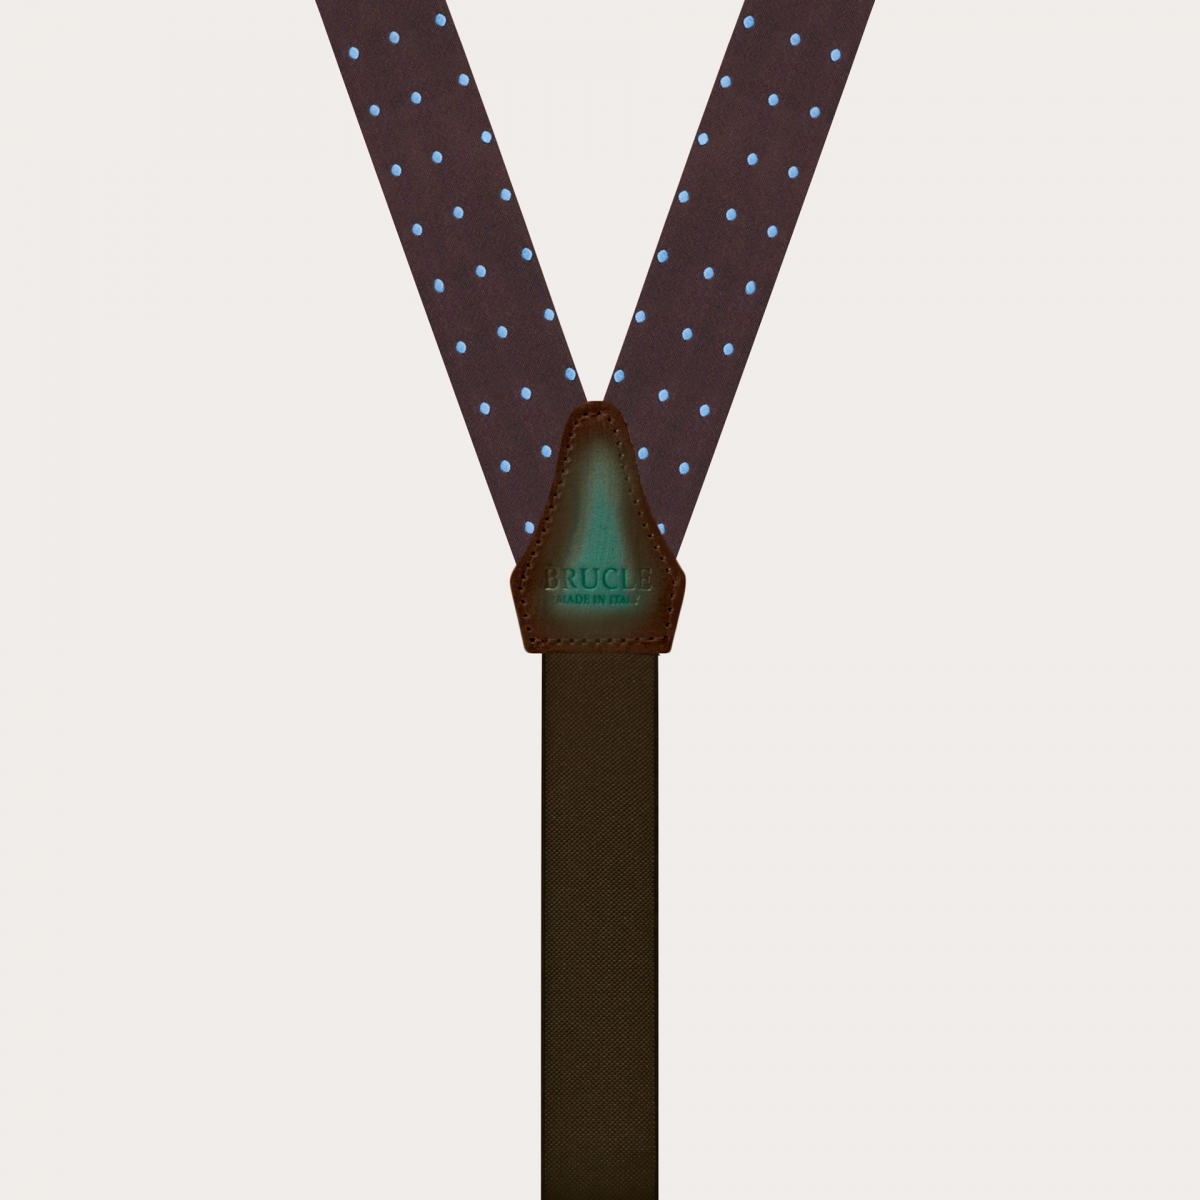 BRUCLE Raffinierte dünne Hosenträger aus brauner Jacquard-Seide mit hellblauem Punktmuster